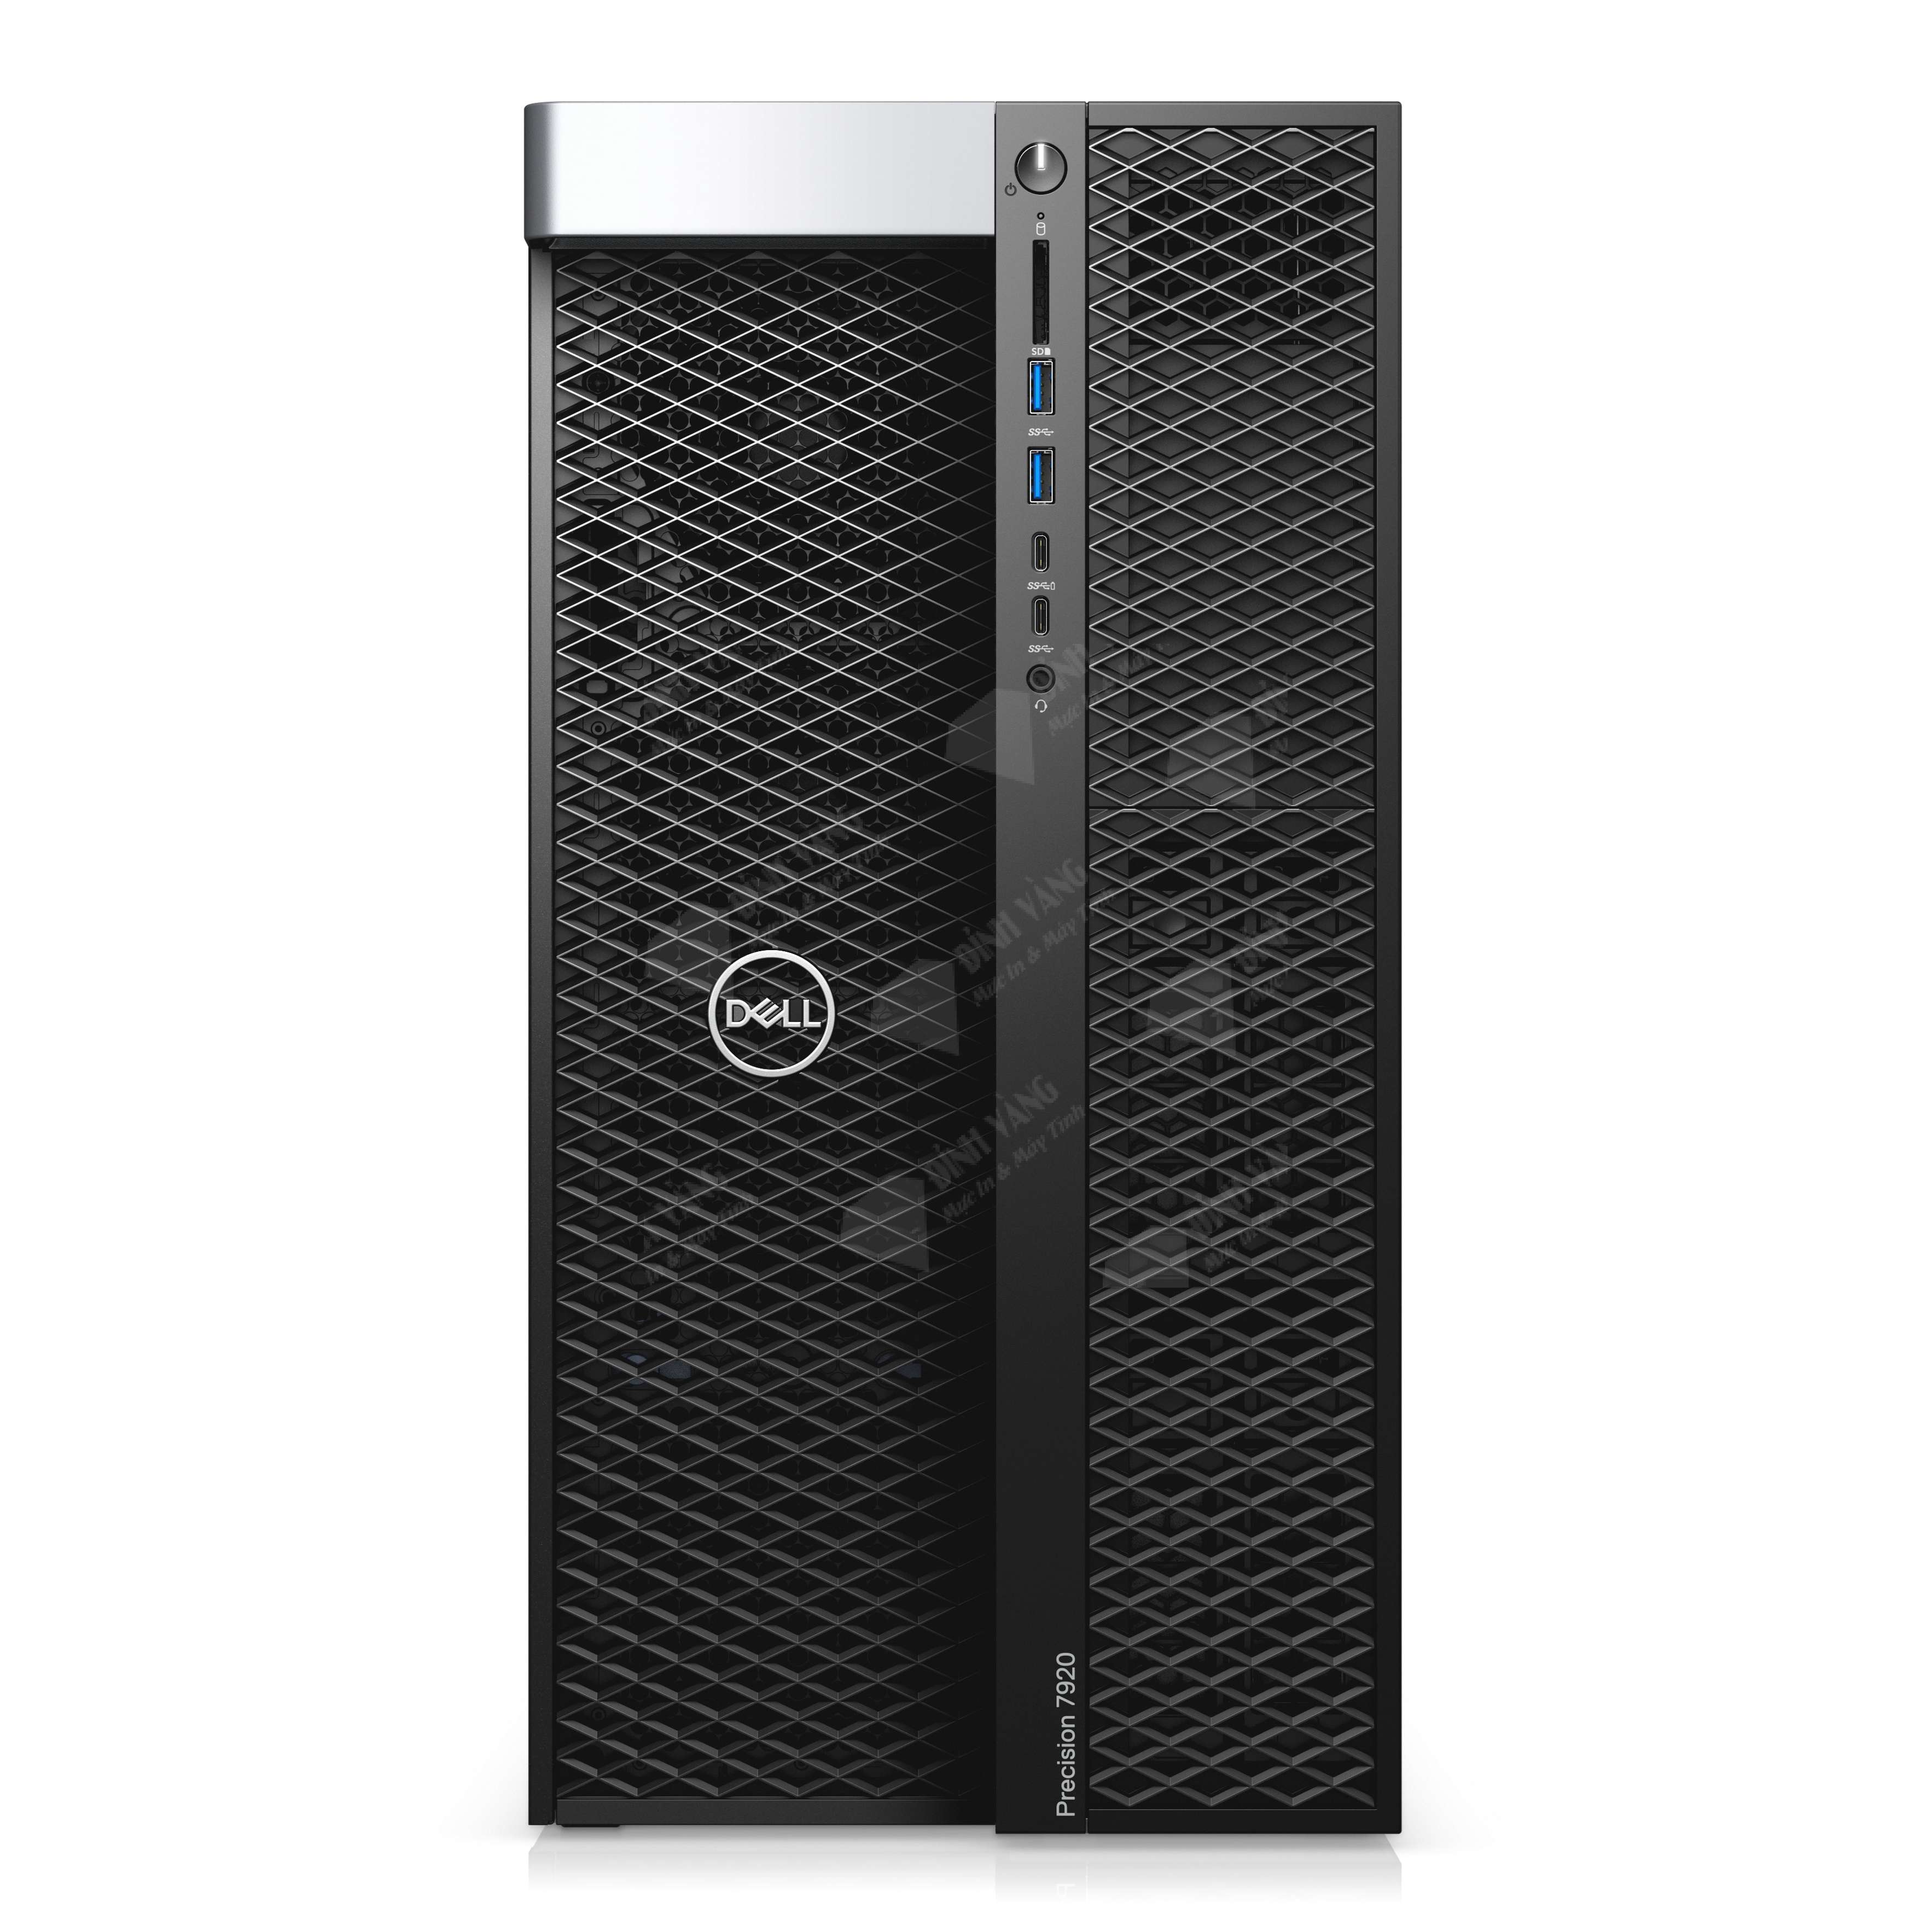 PC Dell Workstation Precision 7920 Tower 42PT79DW05 (Intel Xeon Silver 4112, Ram 32GB, HDD 1TB, Nvidia Quadro RTX5000 16GB, Win10 Pro, 3Y)